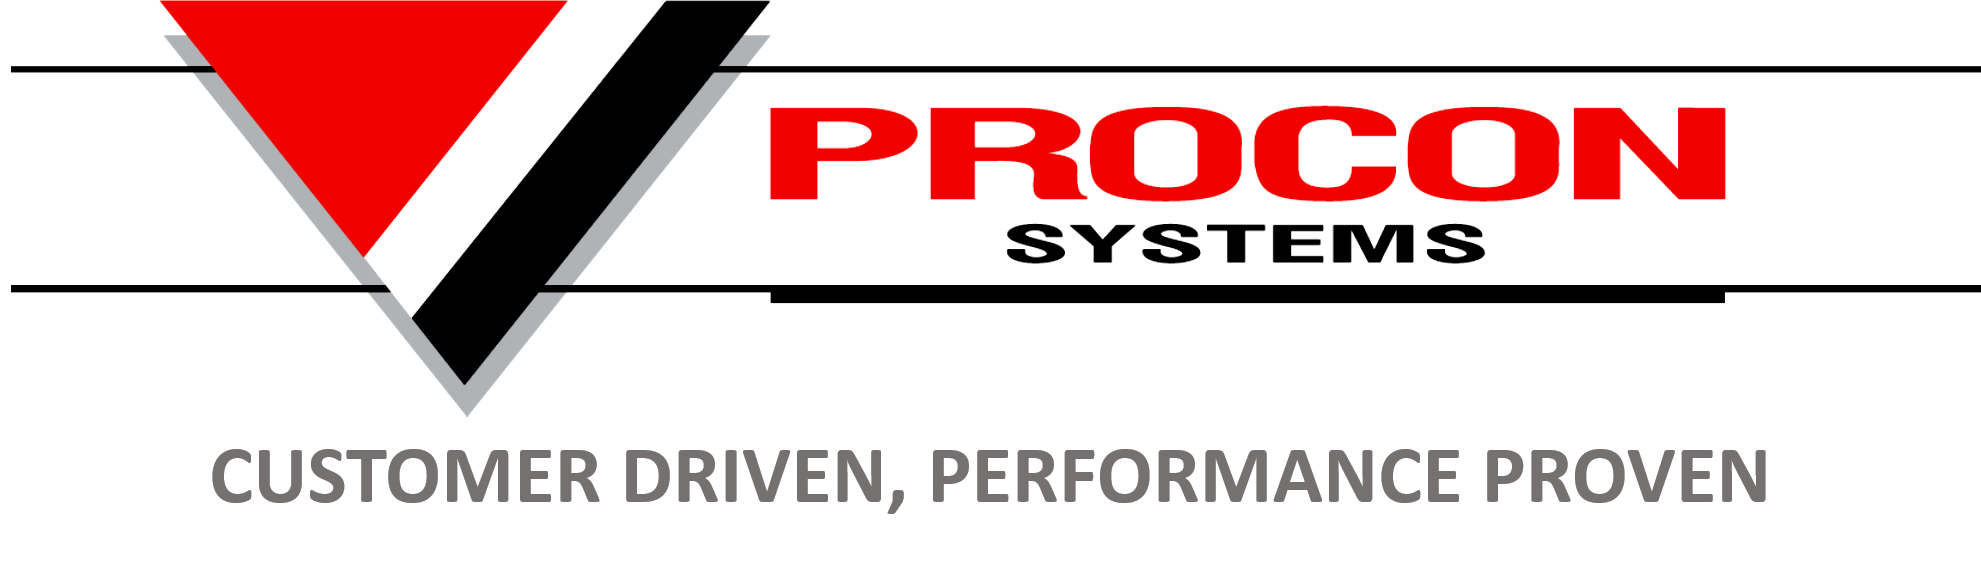 Automitter Pro Procon